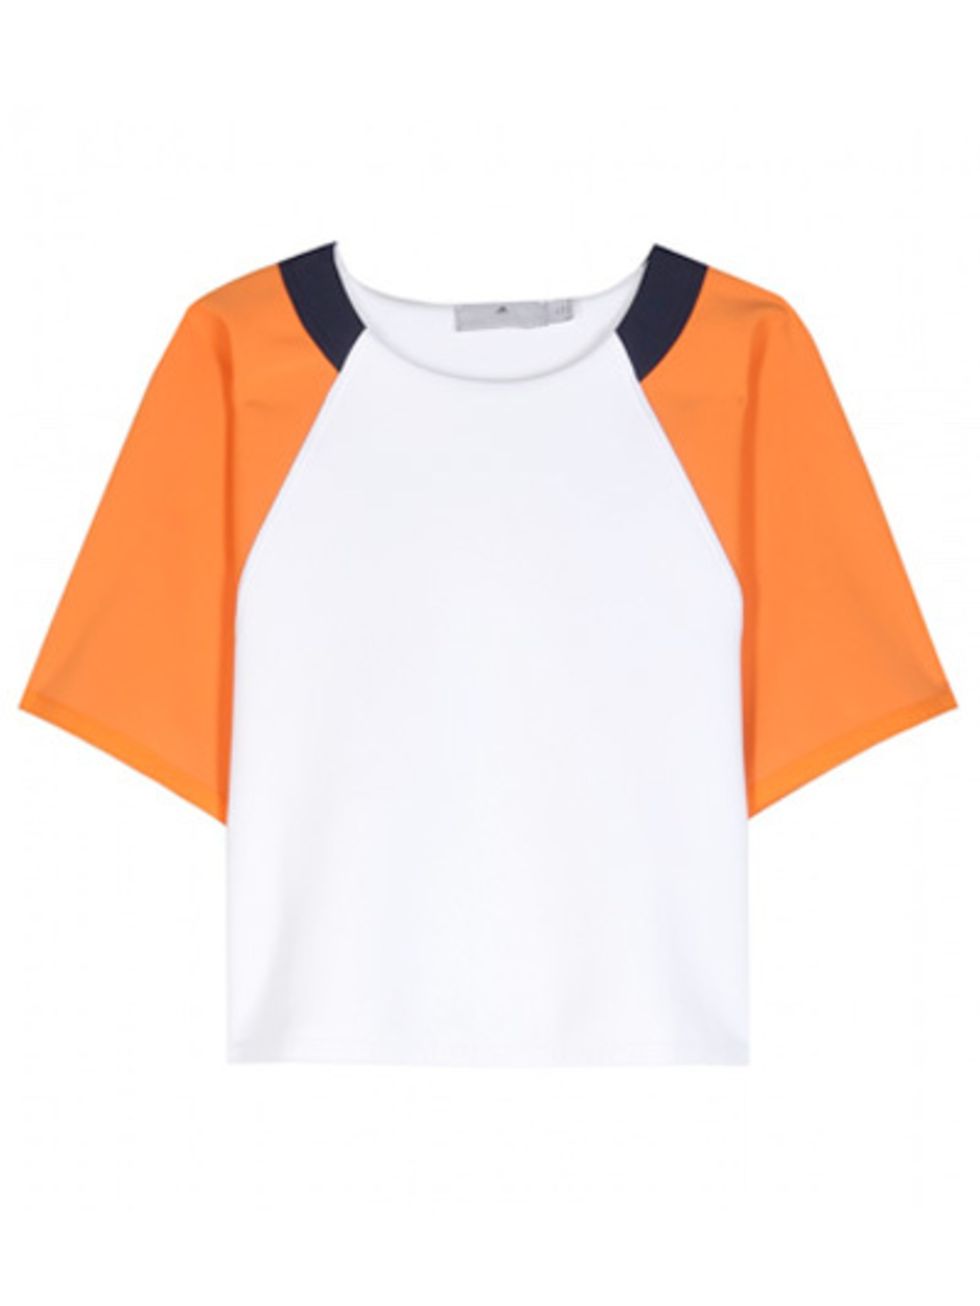 Product, Sleeve, Shoulder, Orange, White, T-shirt, Amber, Collar, Carmine, Peach, 